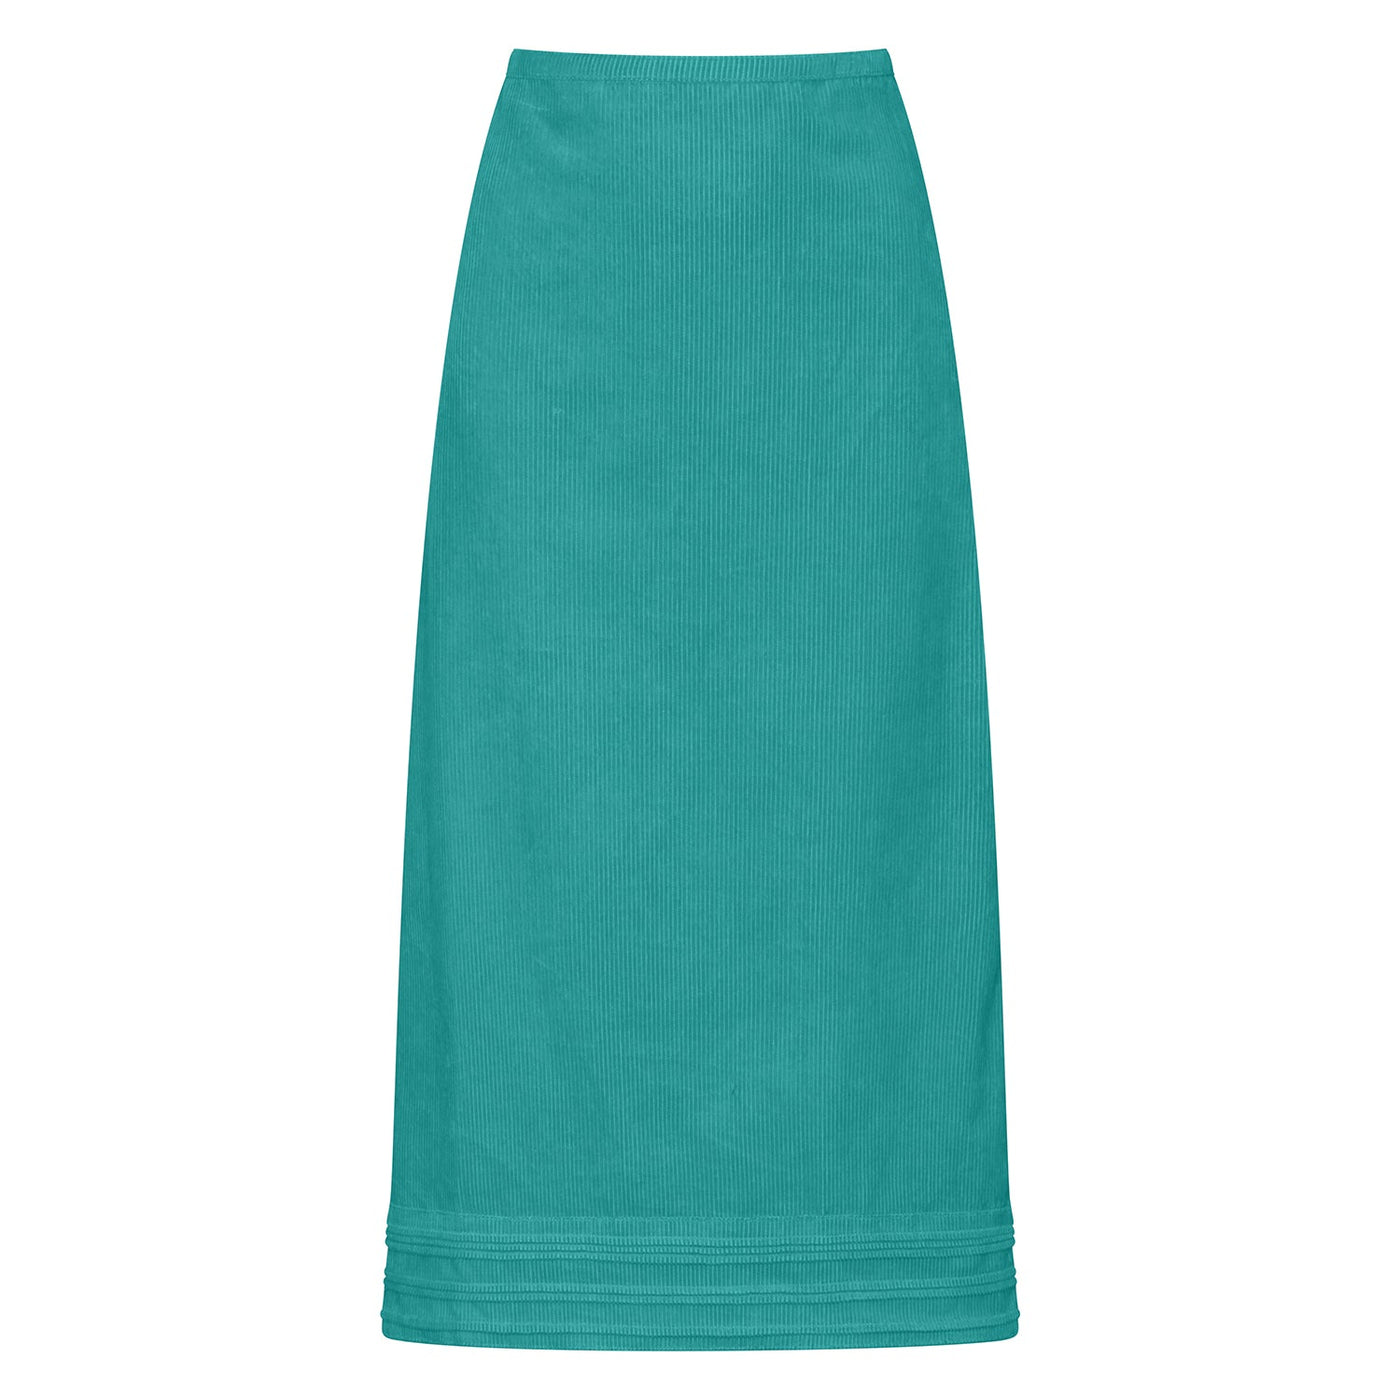 Simple Skirt - Jade Green